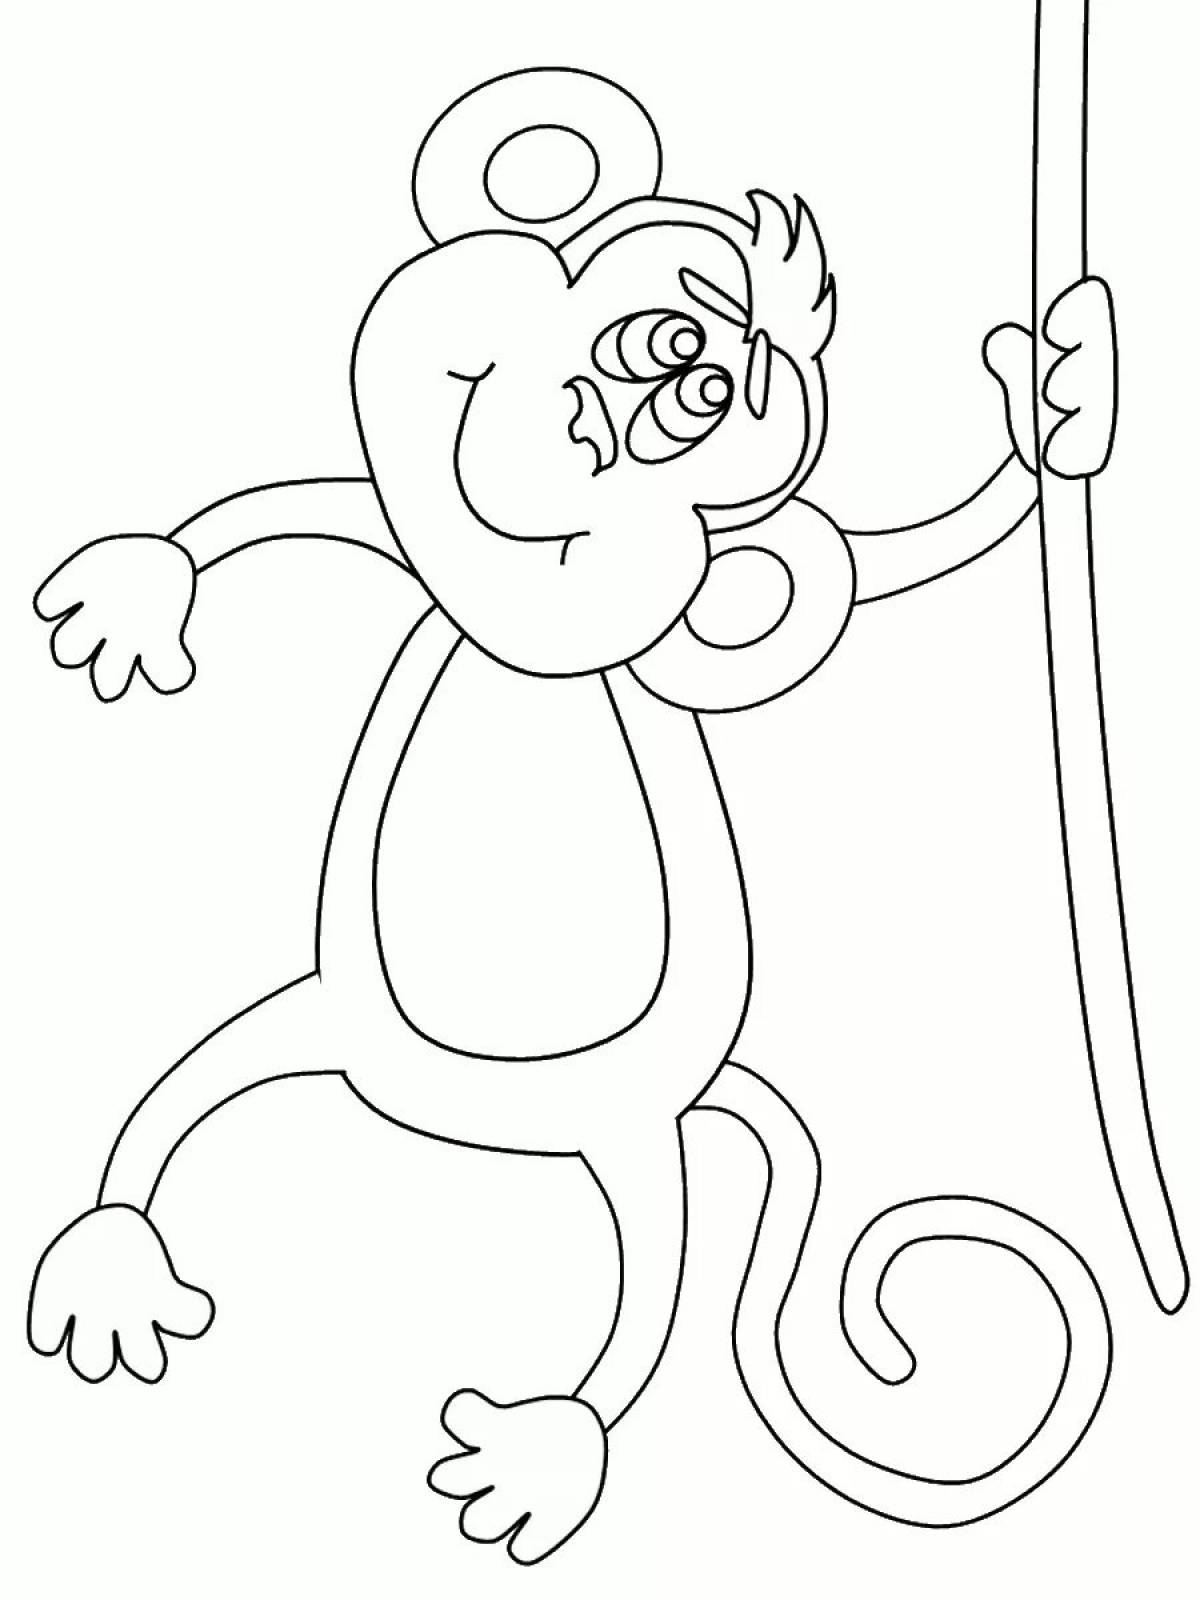 Coloring nice monkey